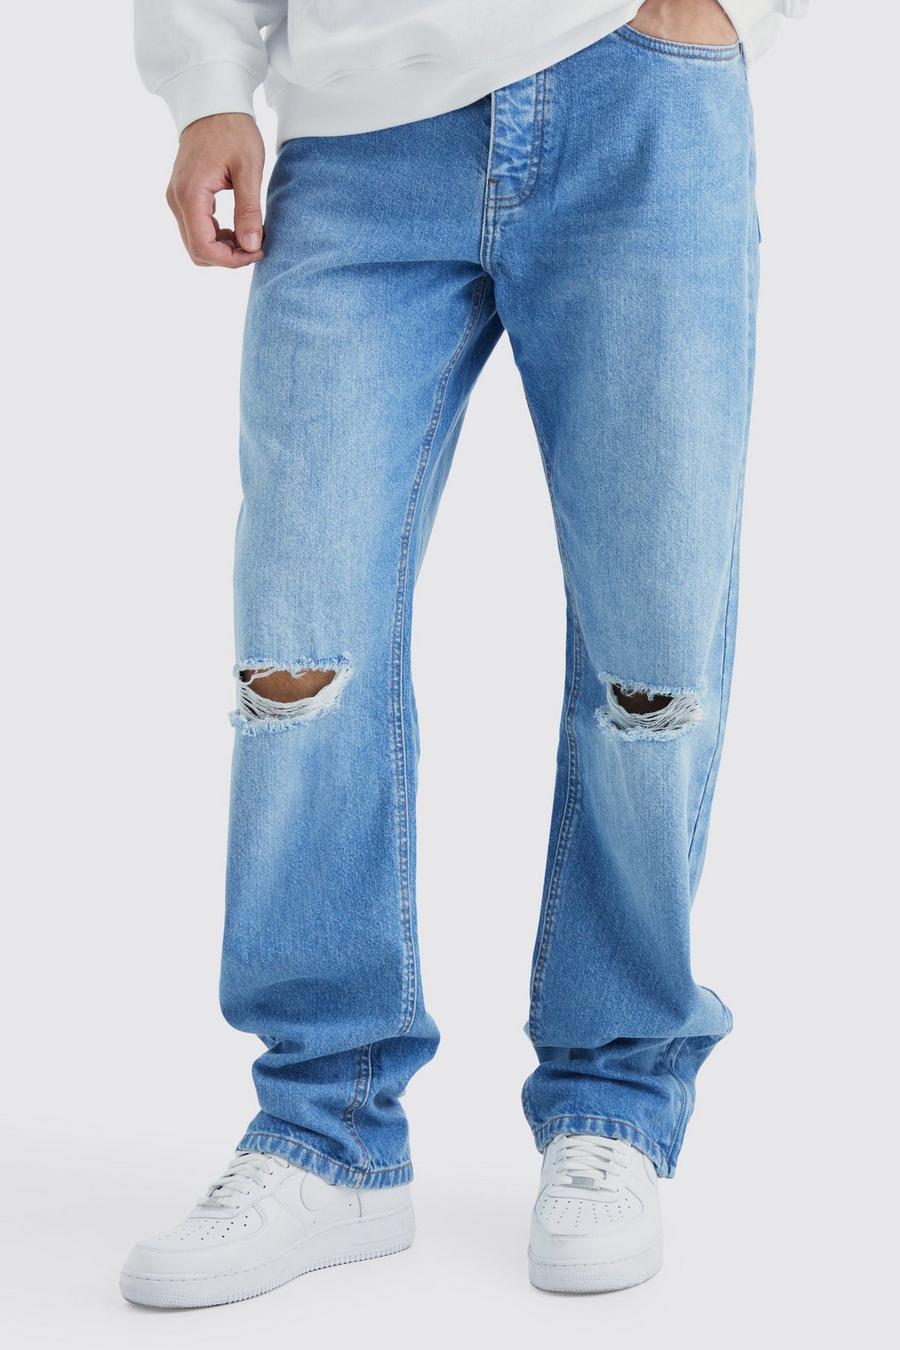 Tall lockere Jeans mit Reißverschluss-Saum, Antique blue